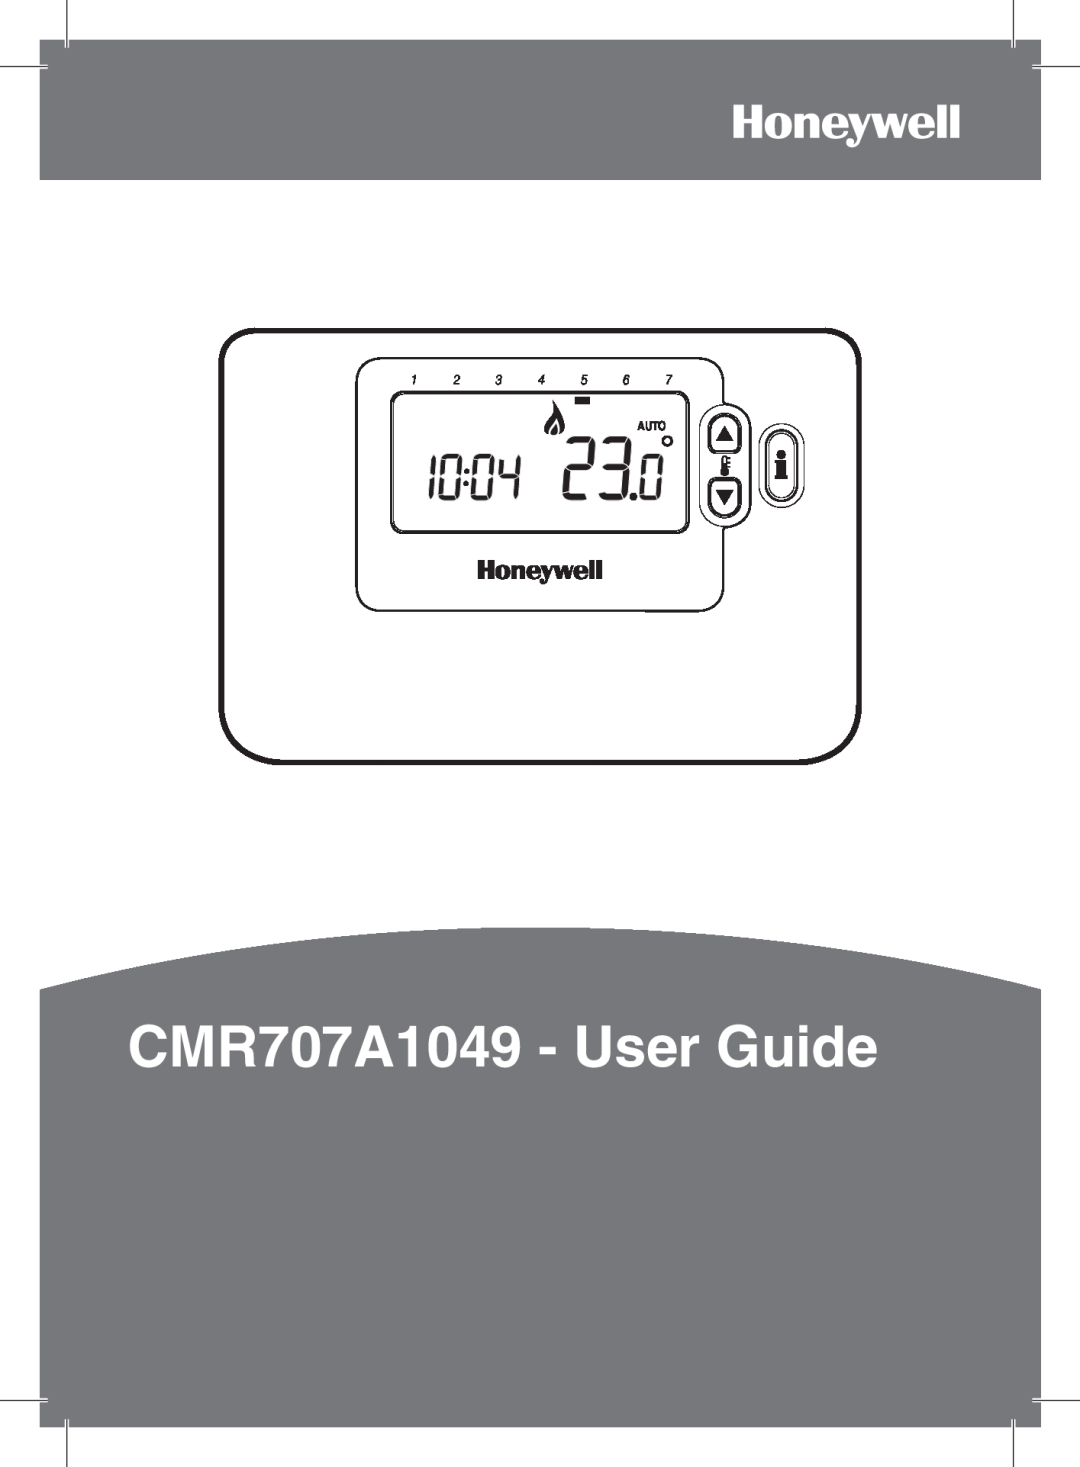 Honeywell manual CMR707A1049 - User Guide, Offmanauto 